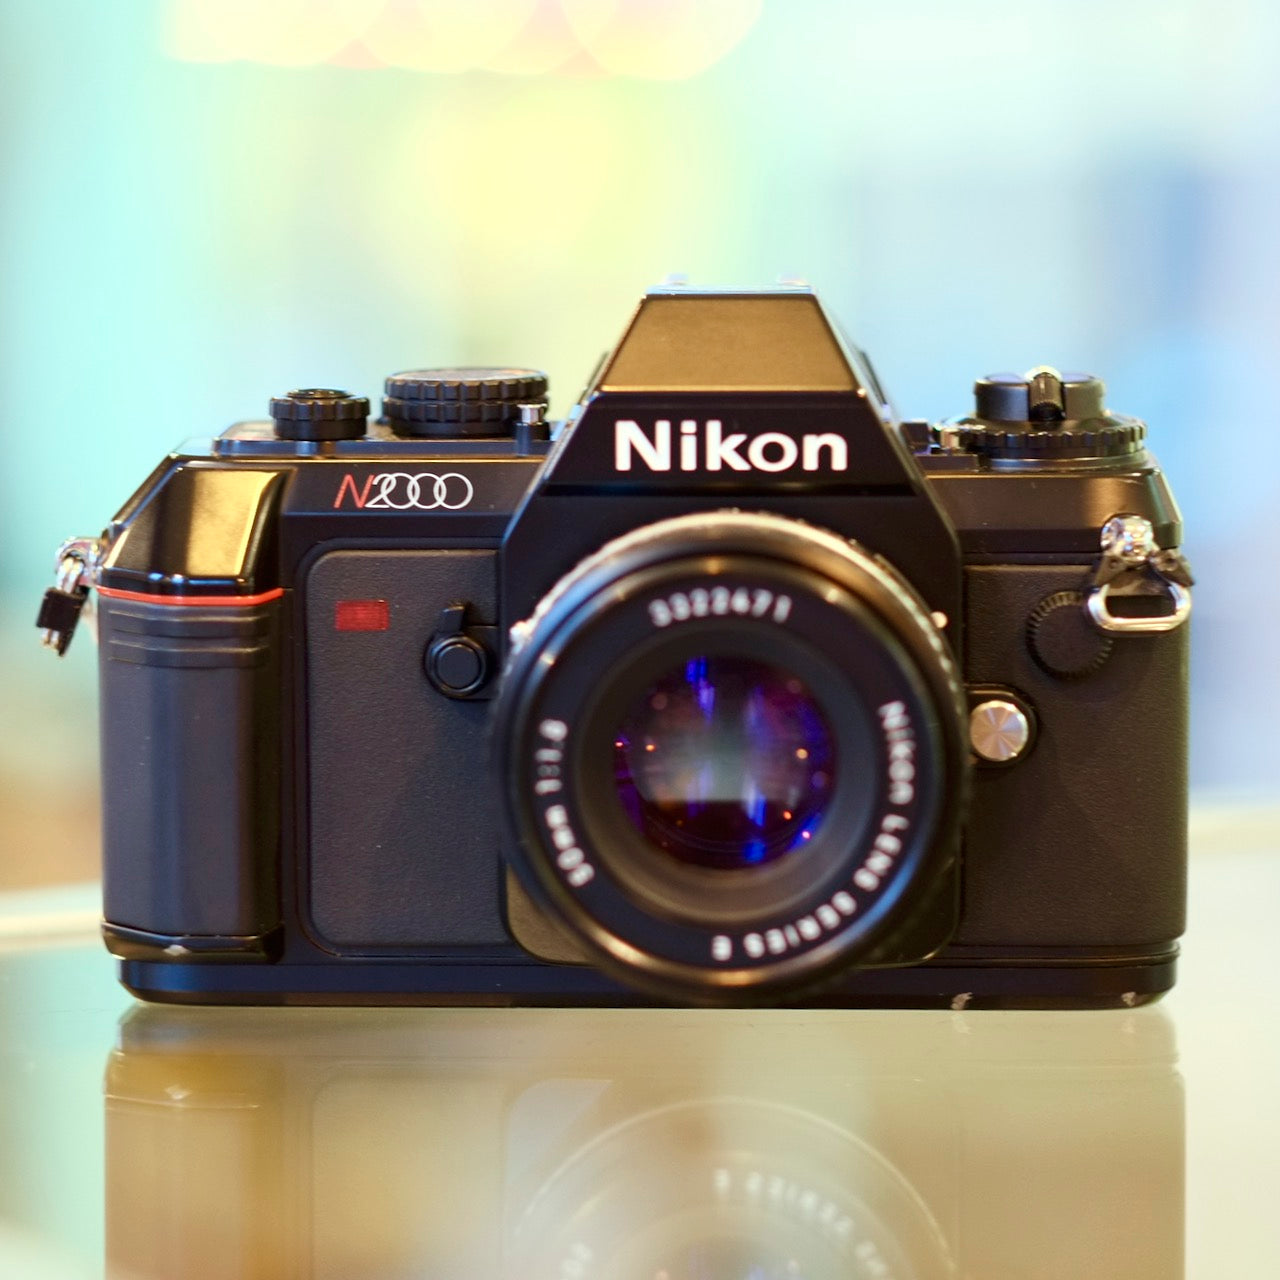 Nikon N2000 with Nikon Series E 50mm f1.8